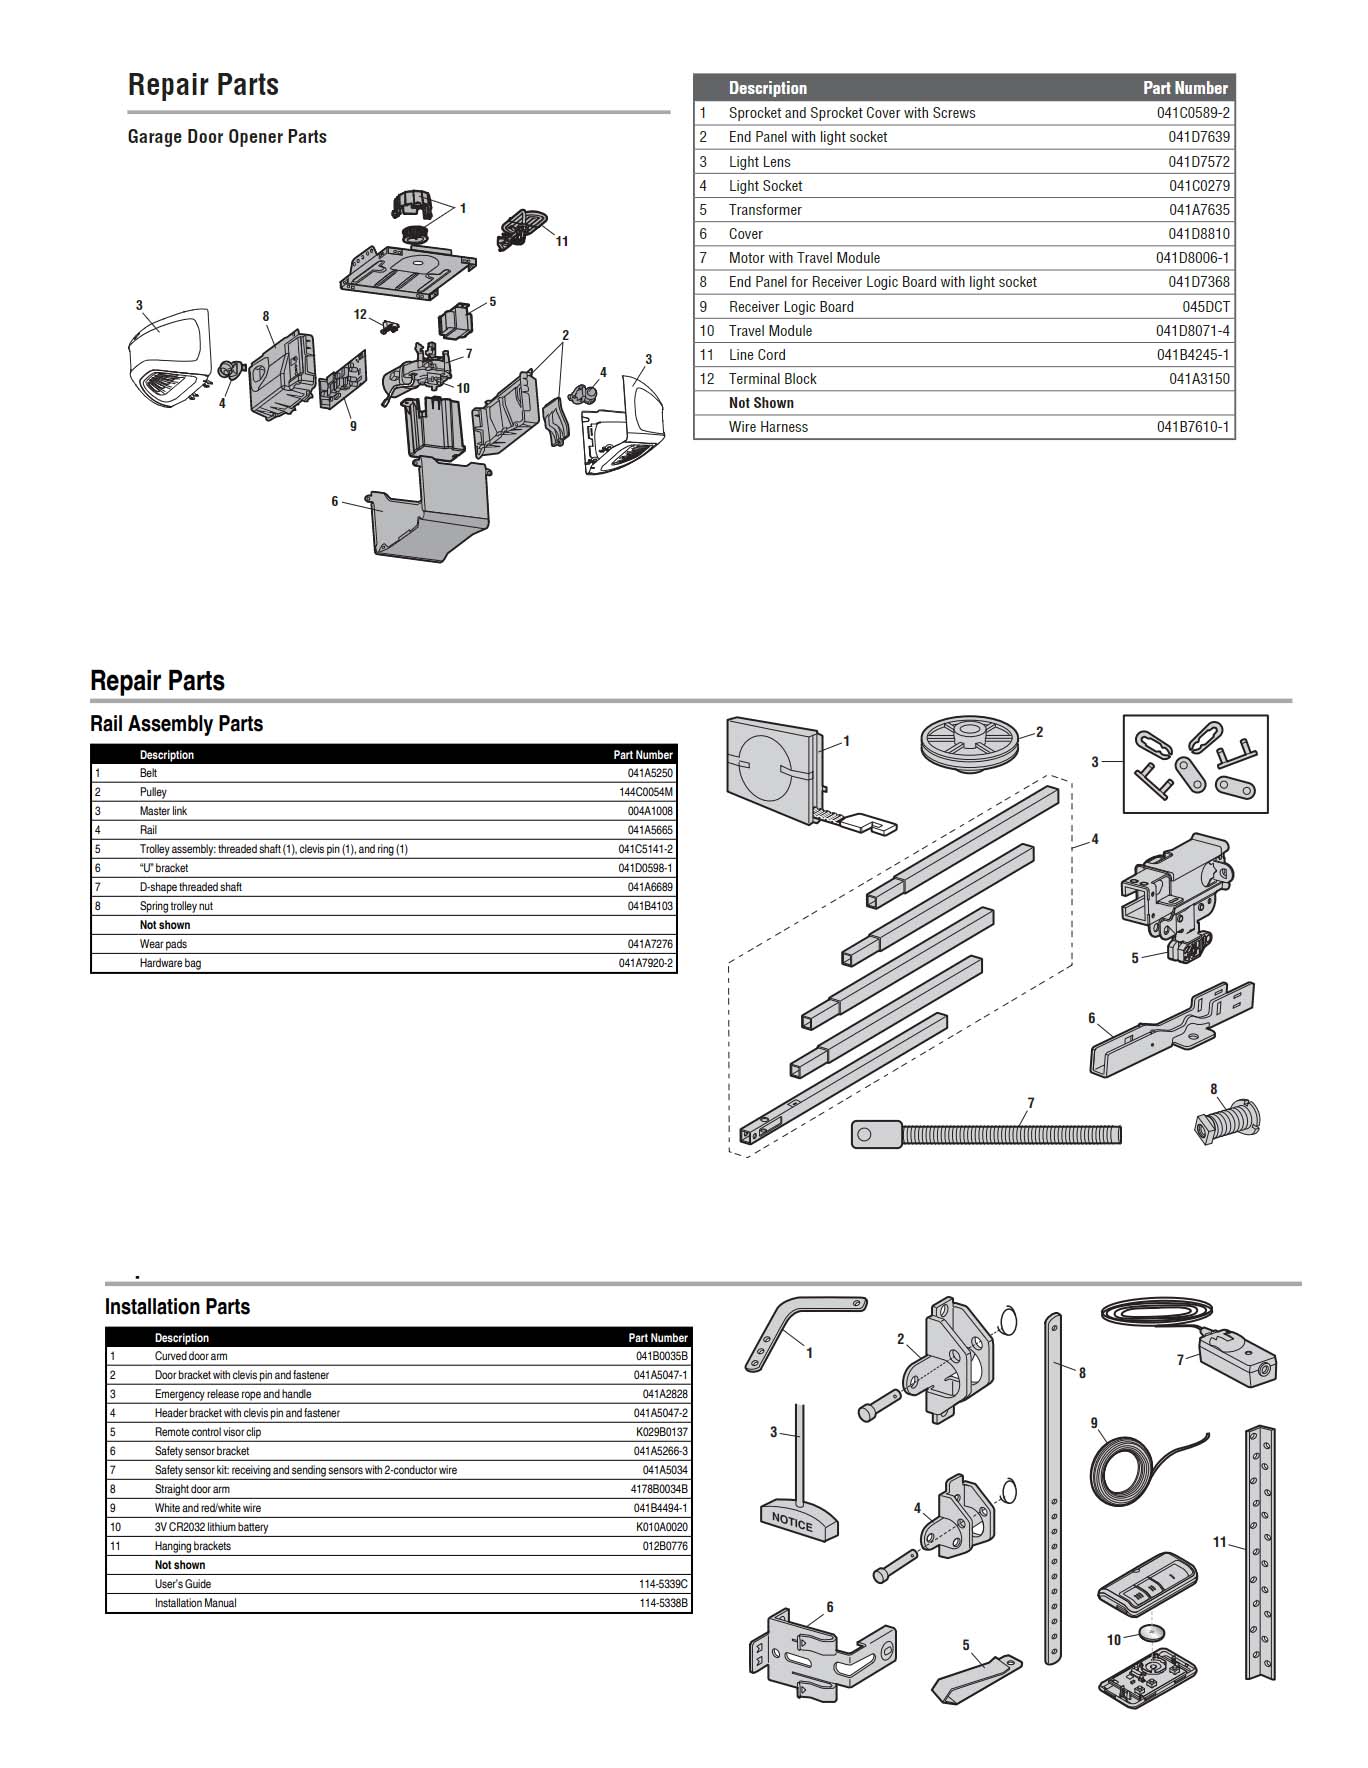 Chamberlain B730, B730C and B740 Garage Door Opener Parts Diagram and List